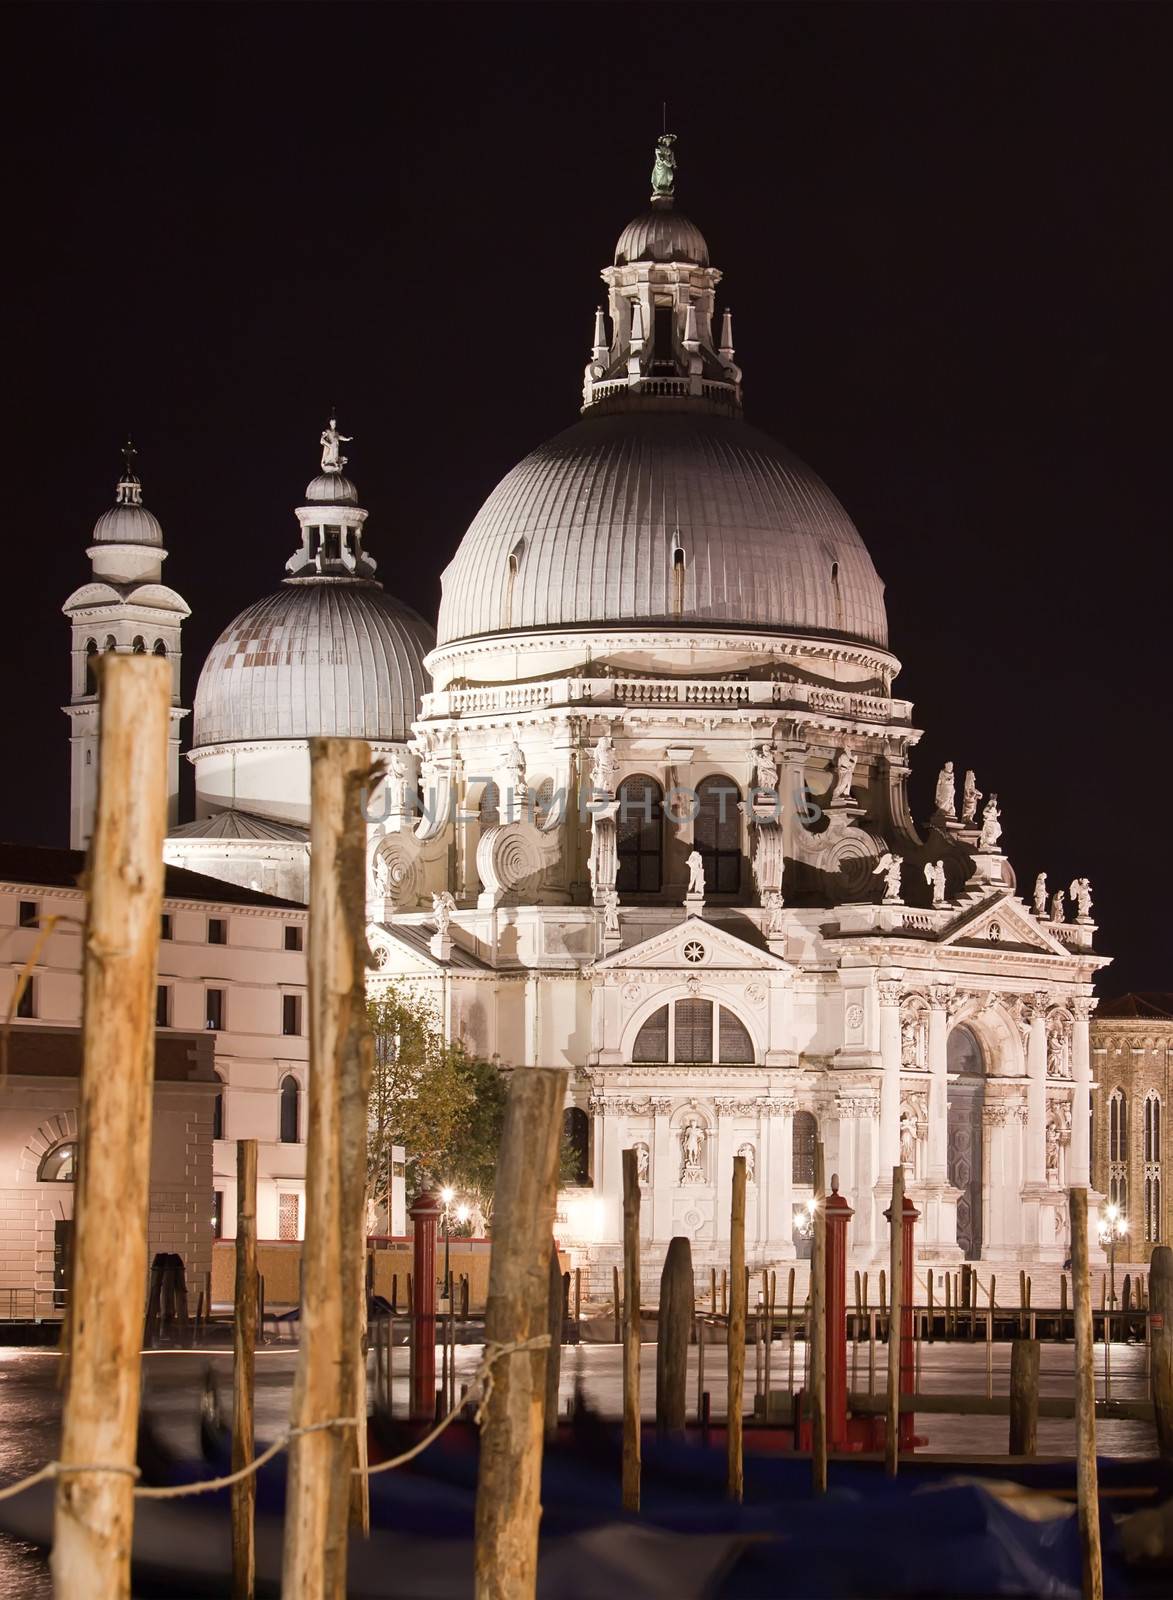 Cathedral of Santa Maria della Salute at night, Venice, Italy